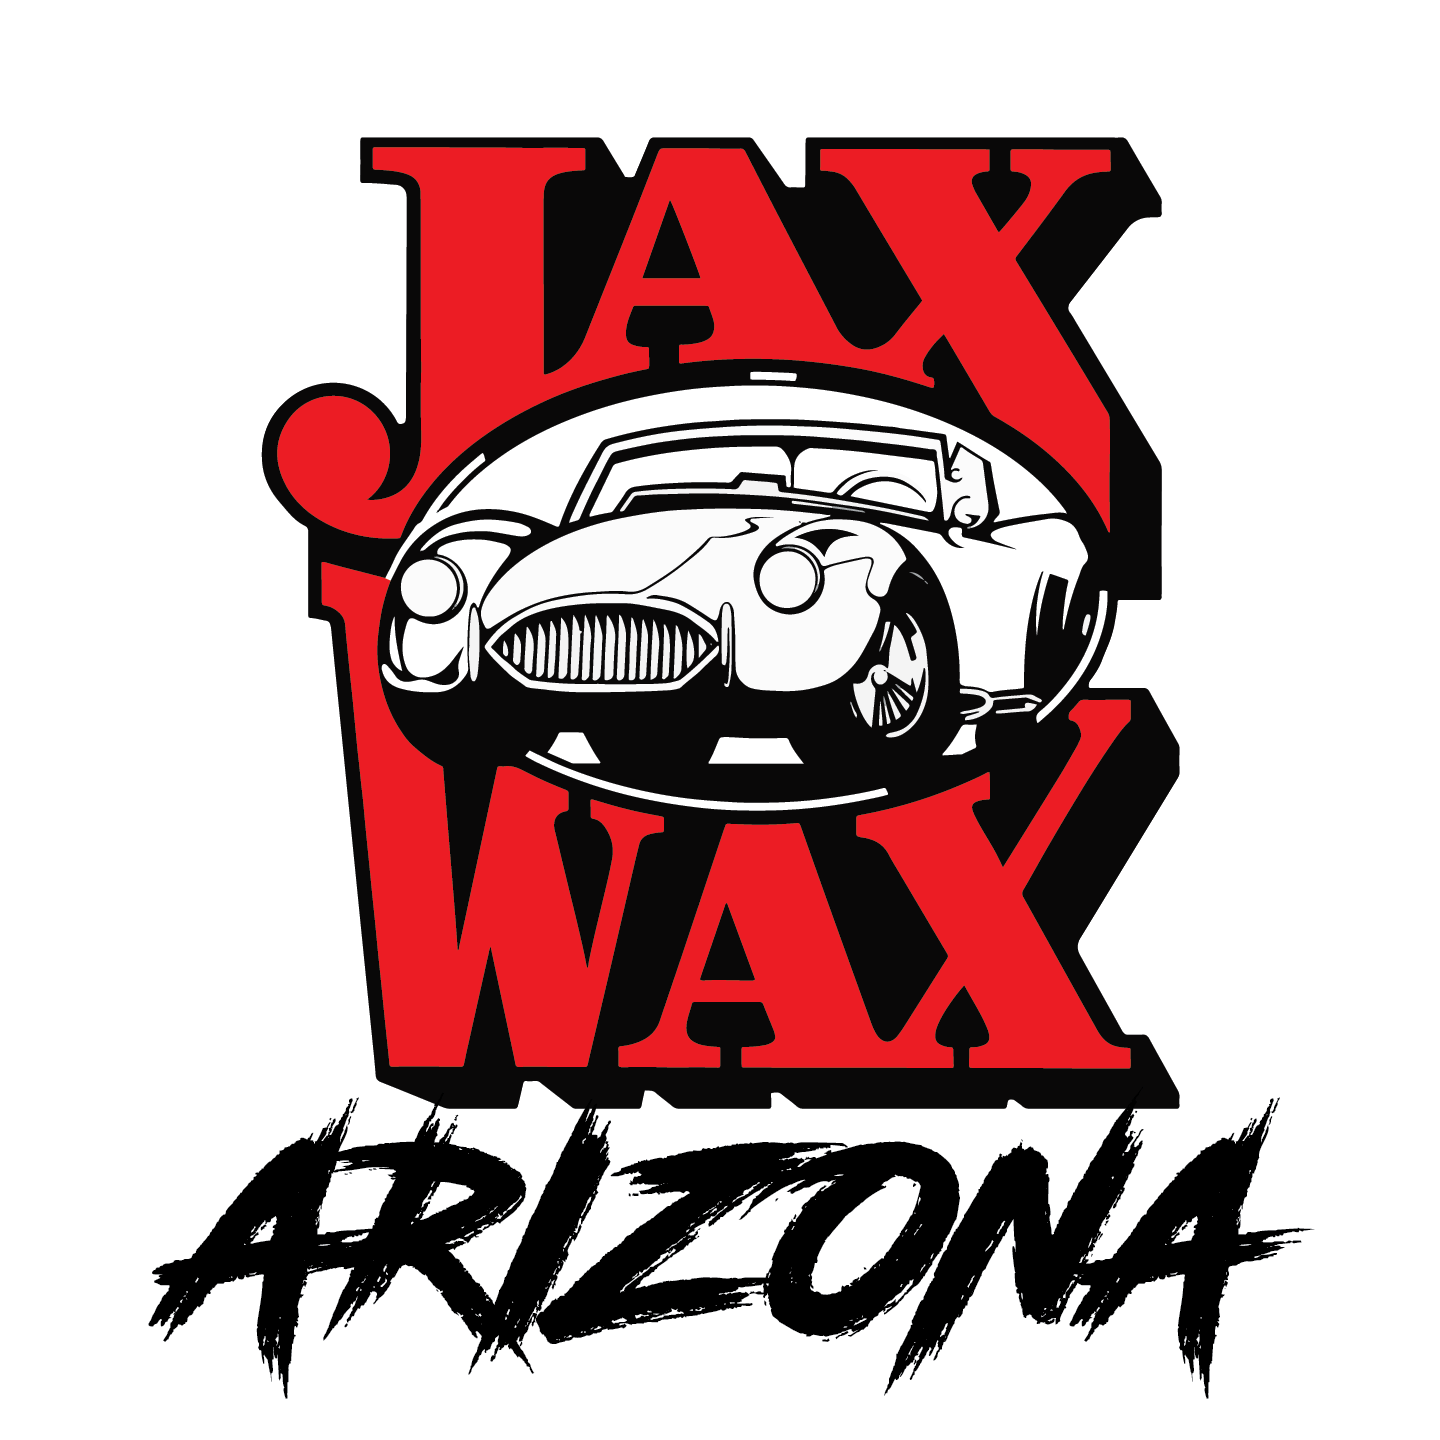 Jax Wax, Ultimate Wheel Cleaner